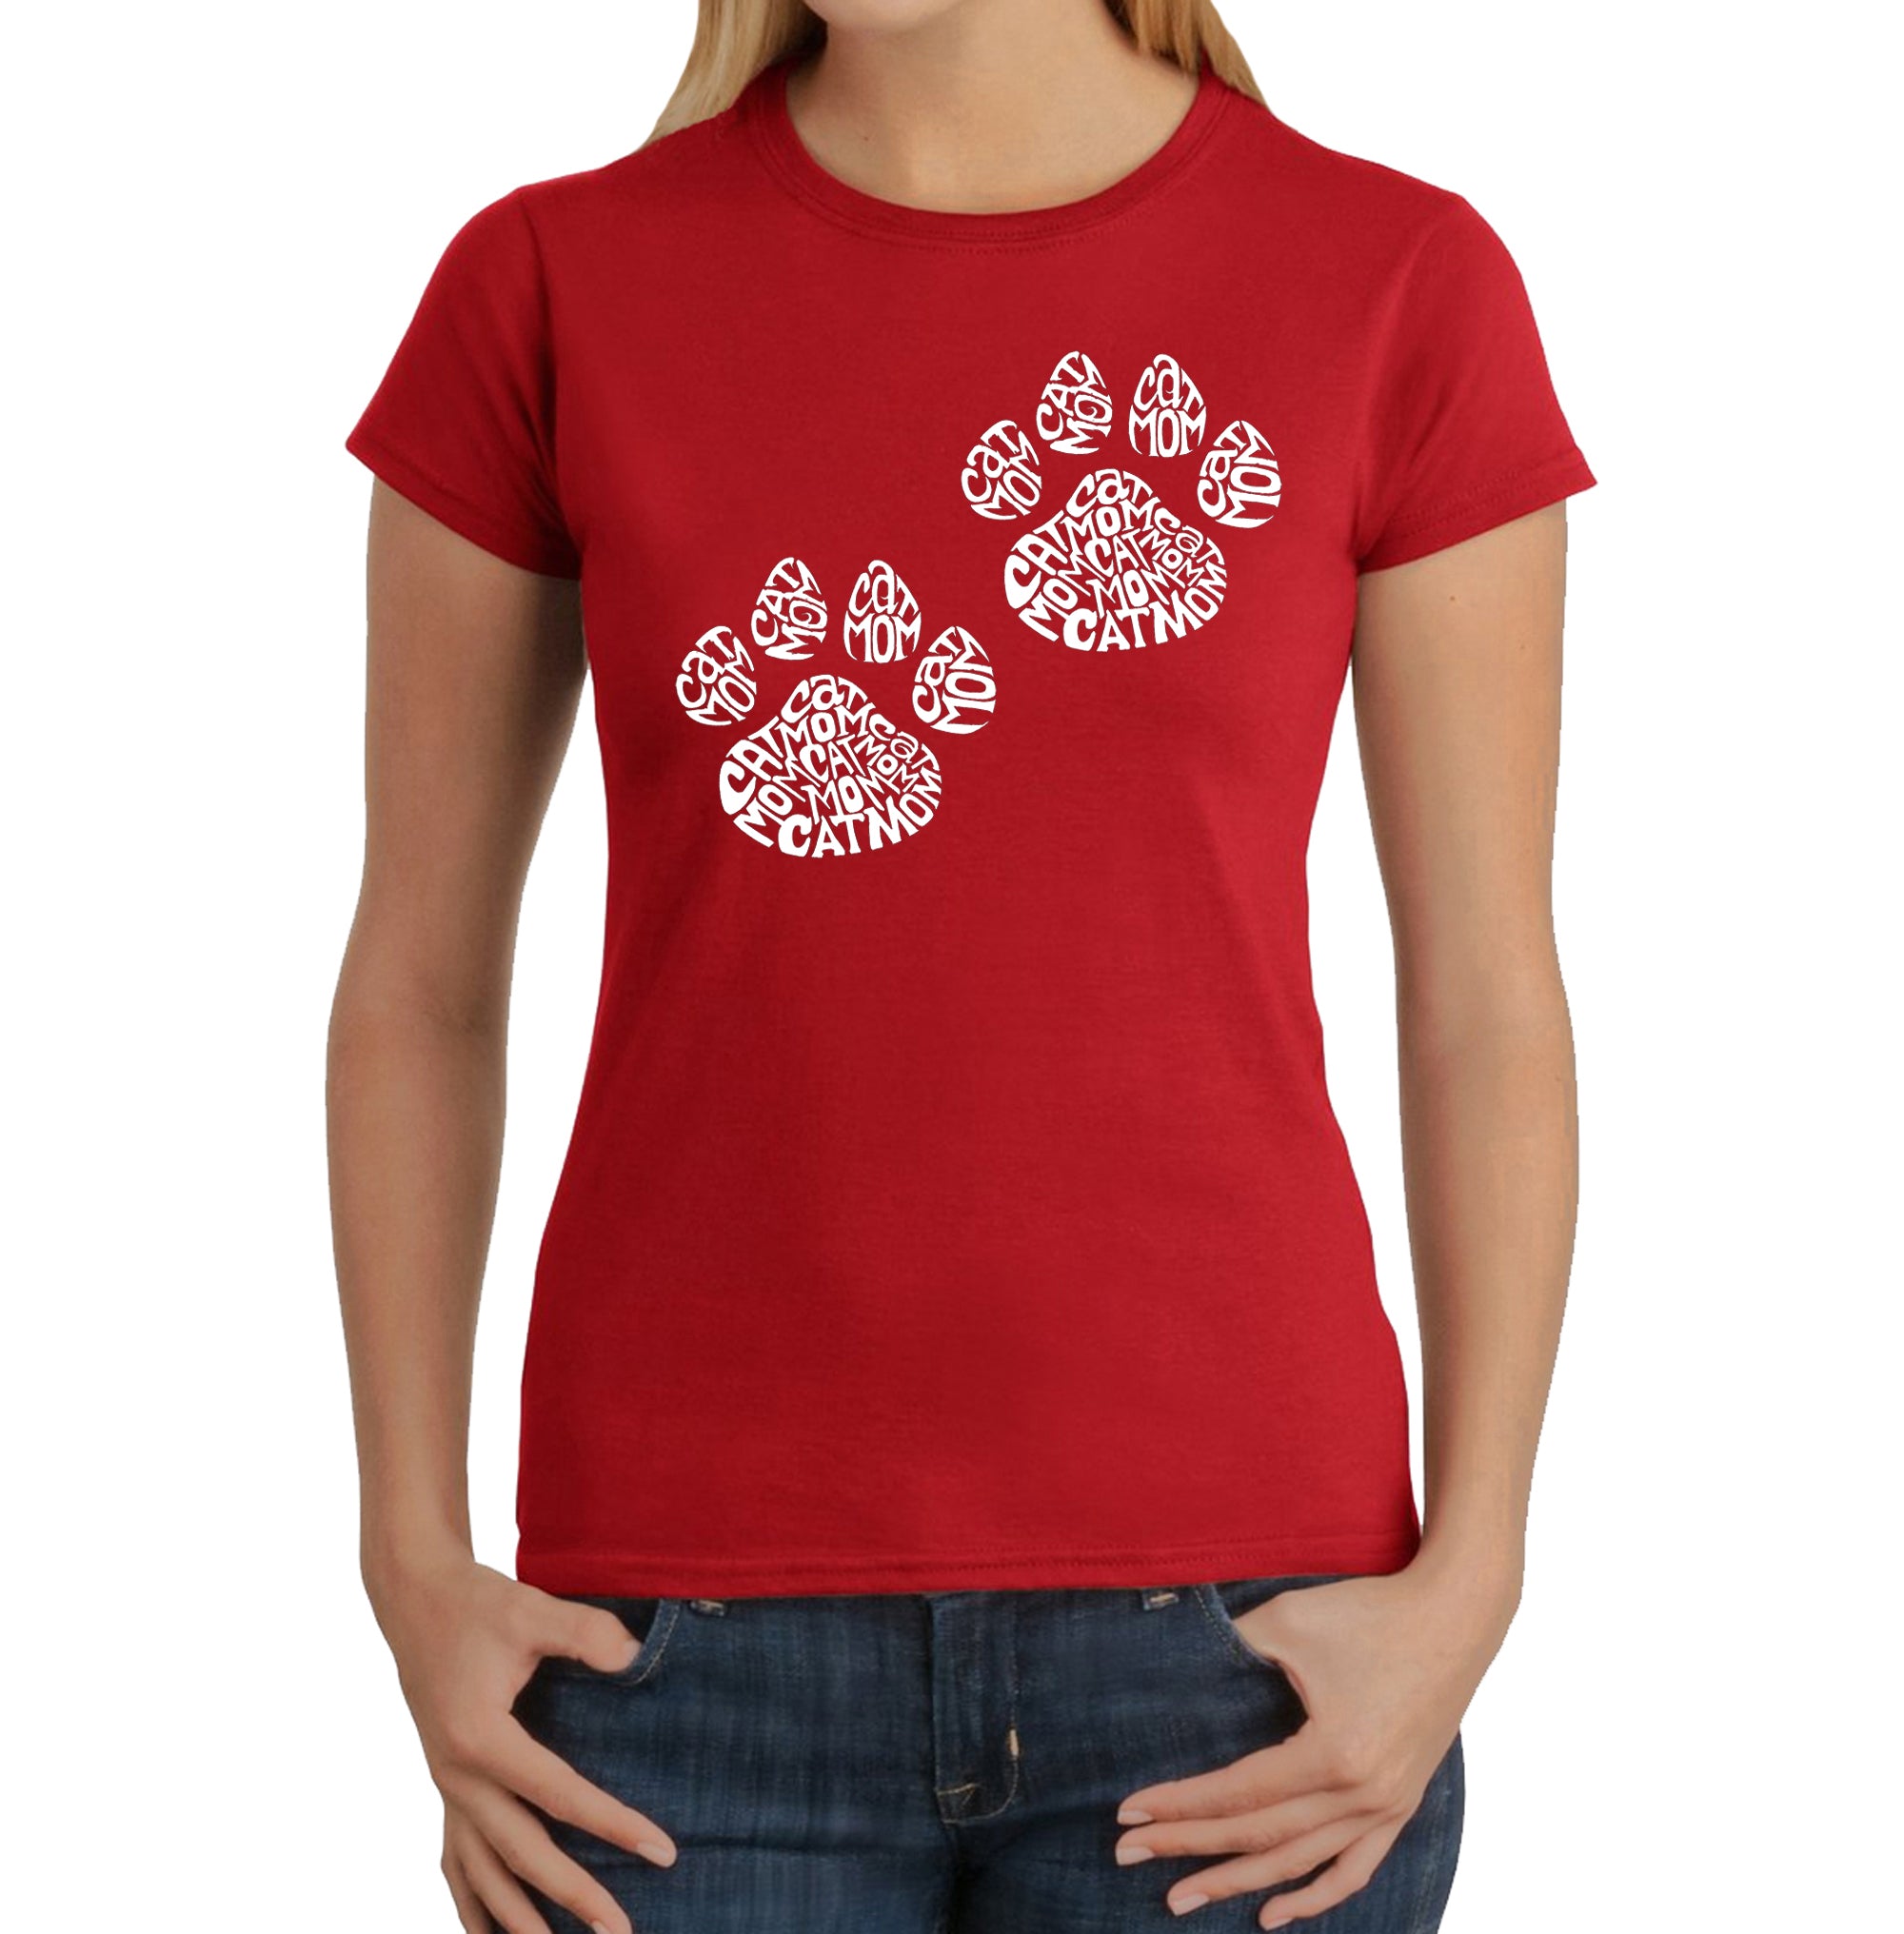 Cat Mom - Women's Word Art T-Shirt - Red - Small